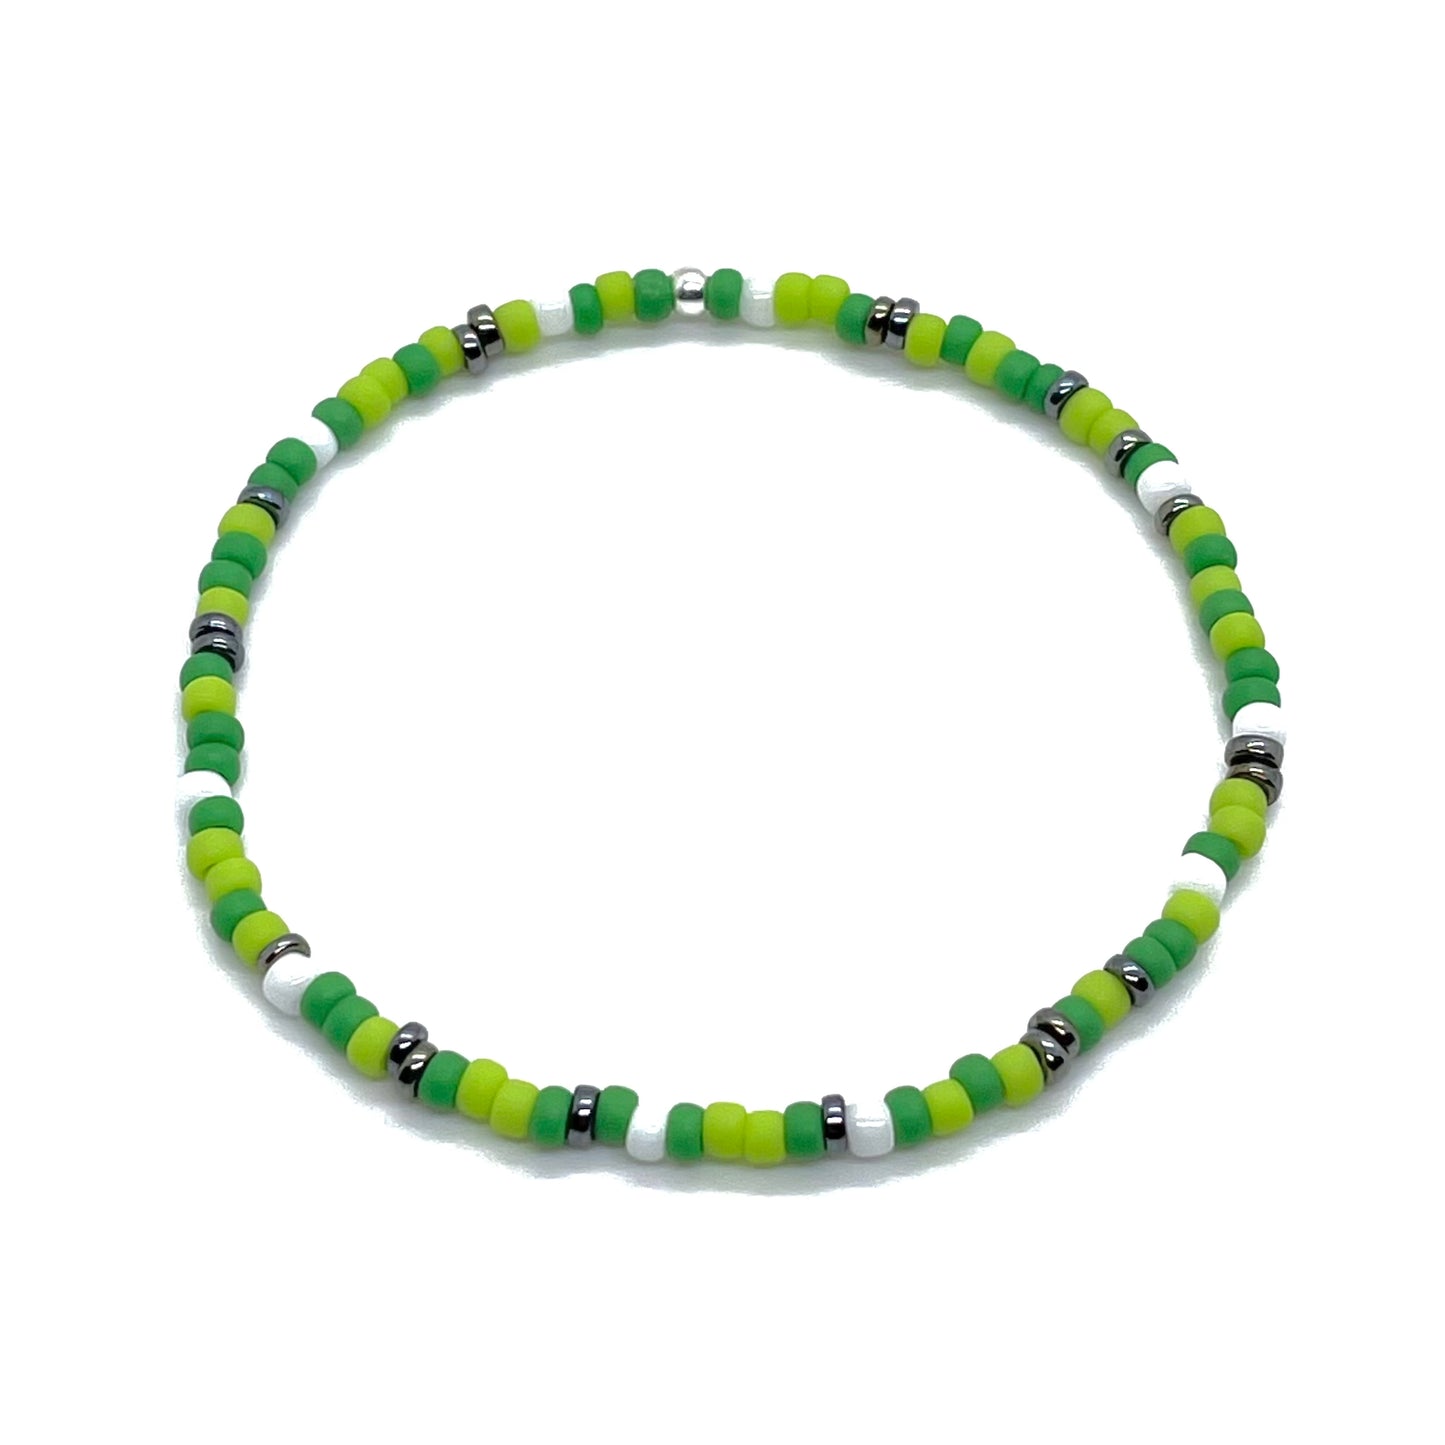 Men's Seed Bead Bracelets/Bright Colorful Mix Bracelets | Sets & Solos